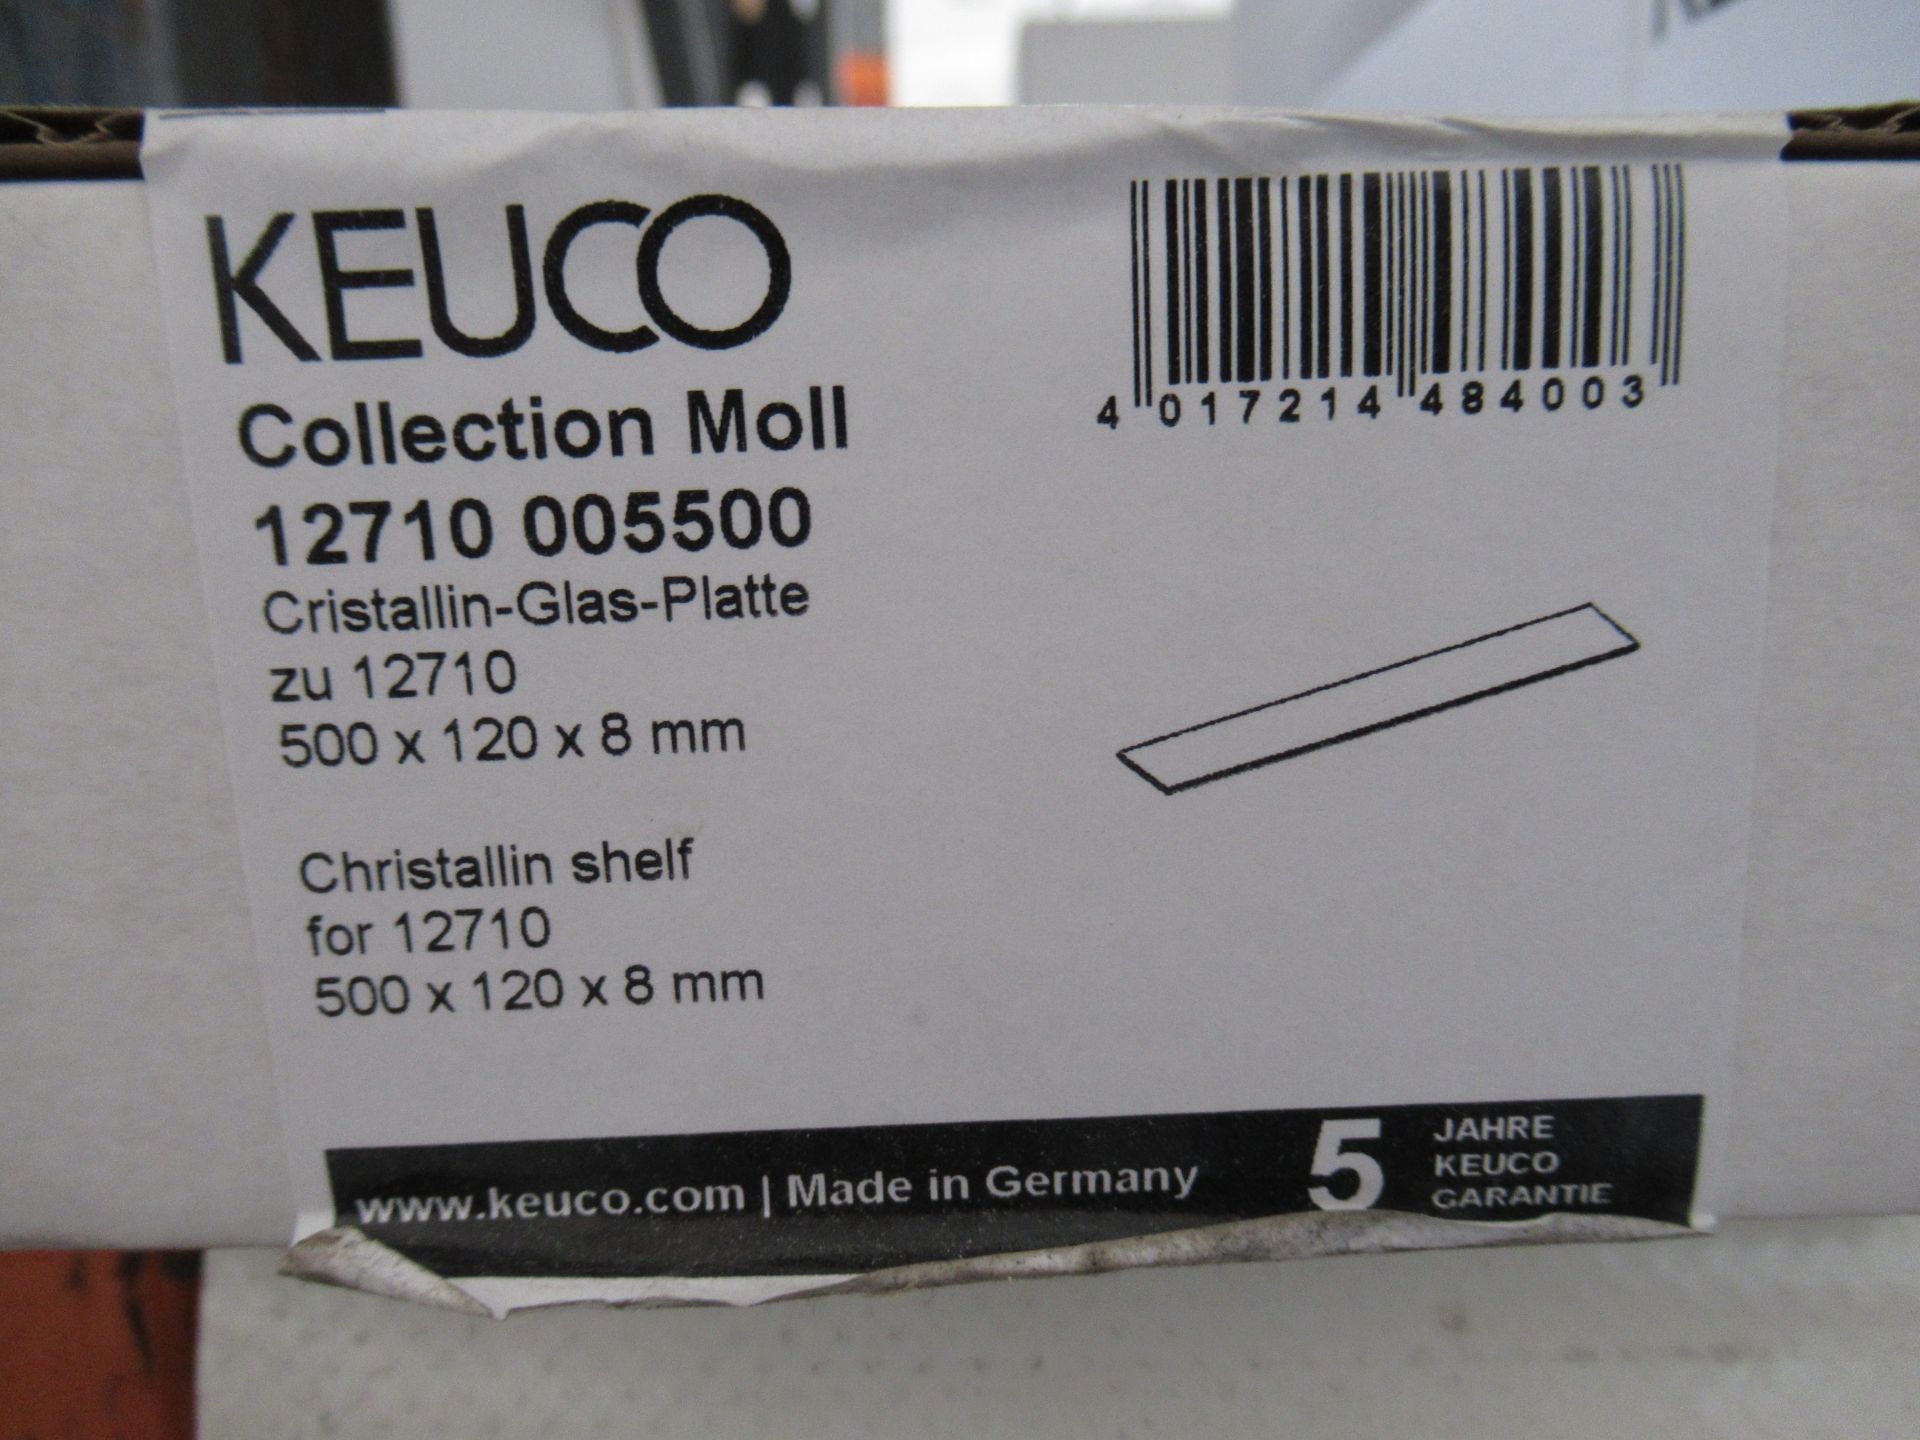 A Keuco Collection Moll Christallin Shelf, P/N 12710-005500 - Image 2 of 2